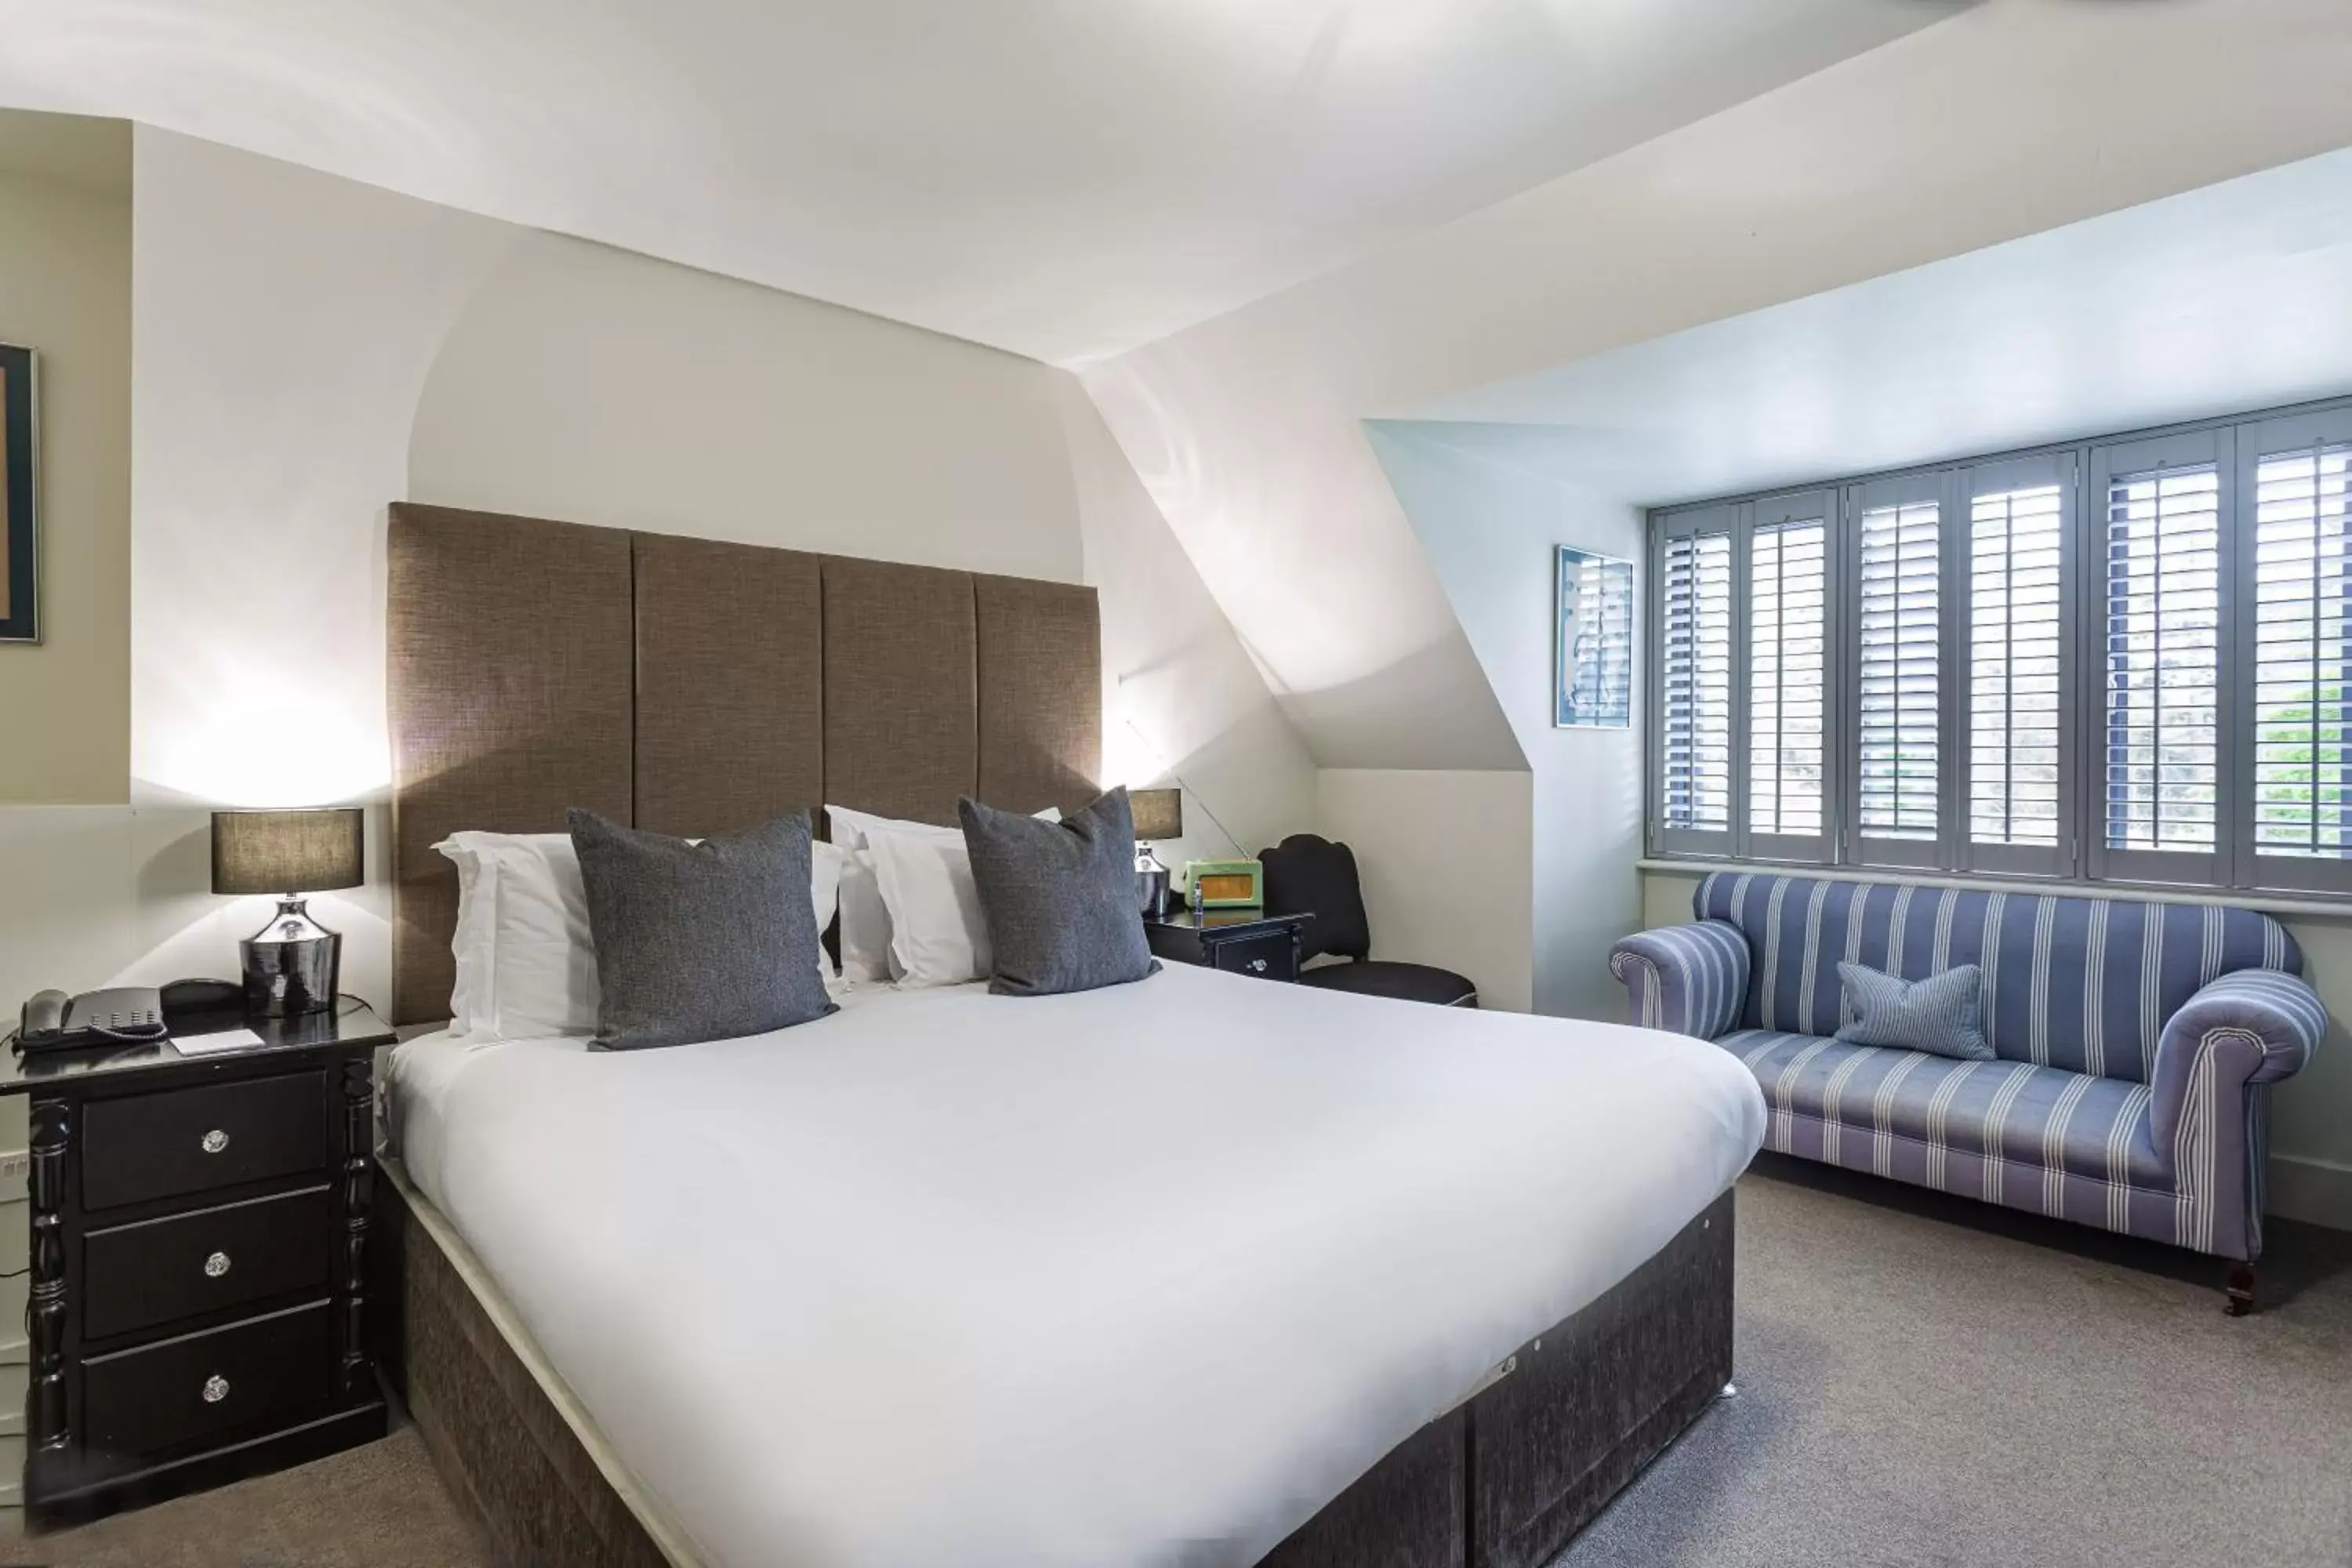 Bed in Forest Park Country Hotel & Inn, Brockenhurst, New Forest, Hampshire